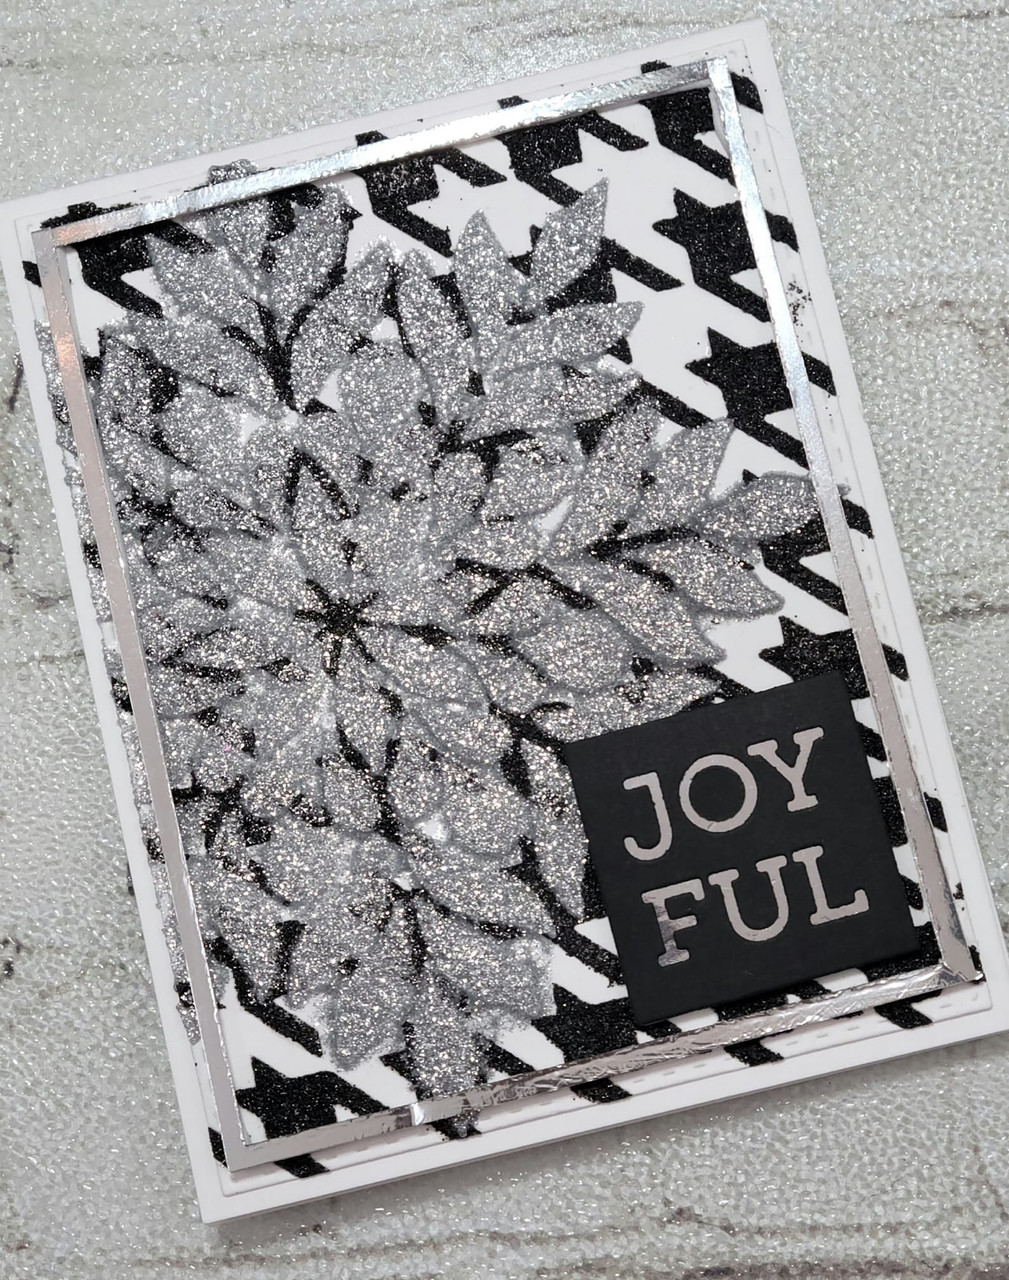 40+ Free Printable Snowflake Stencils & Templates - The Artisan Life